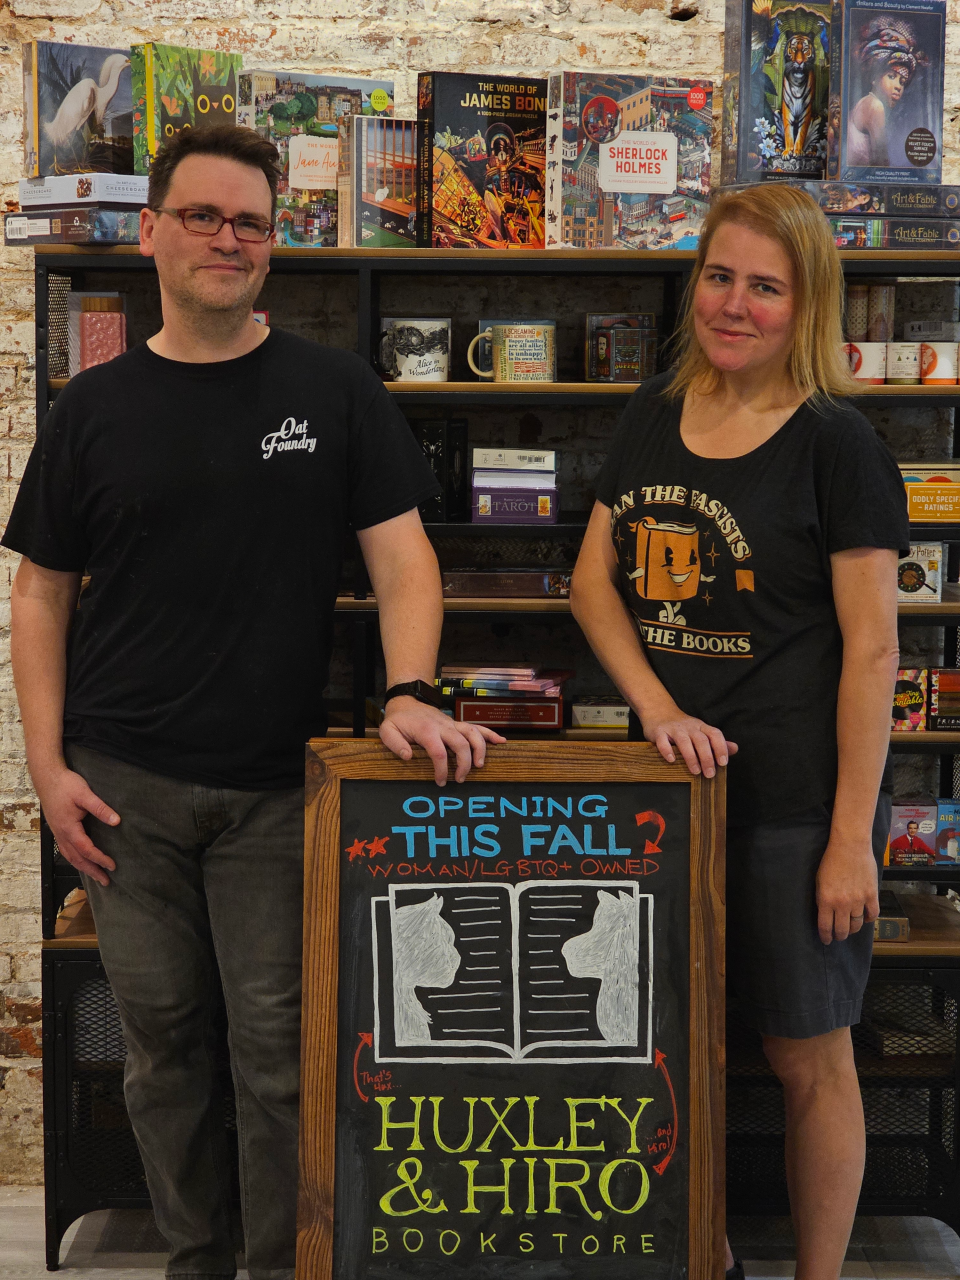 Ryan Eanes and Claire van den Broek own Huxley & Hiro, an independent bookstore in downtown Wilmington, Delaware.